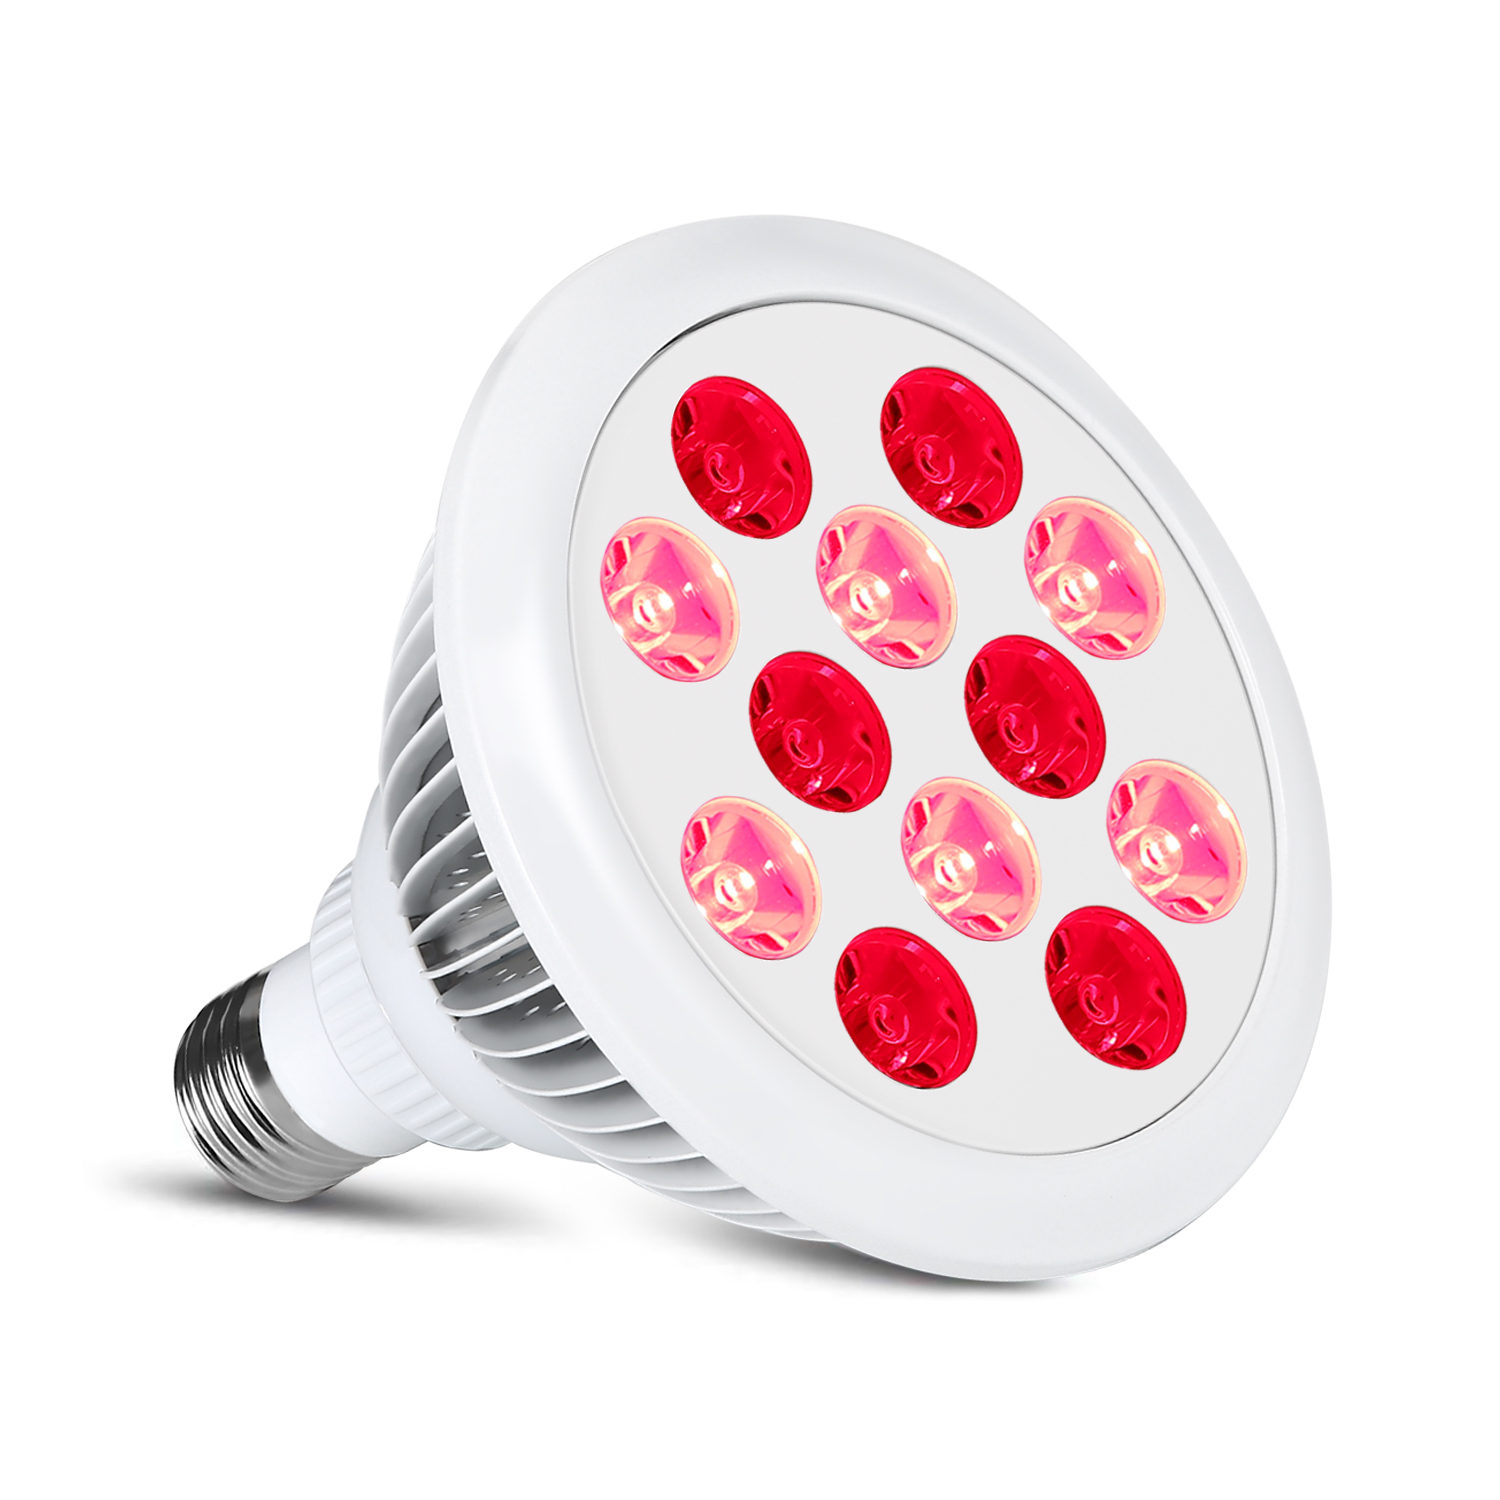 660nm red light bulb